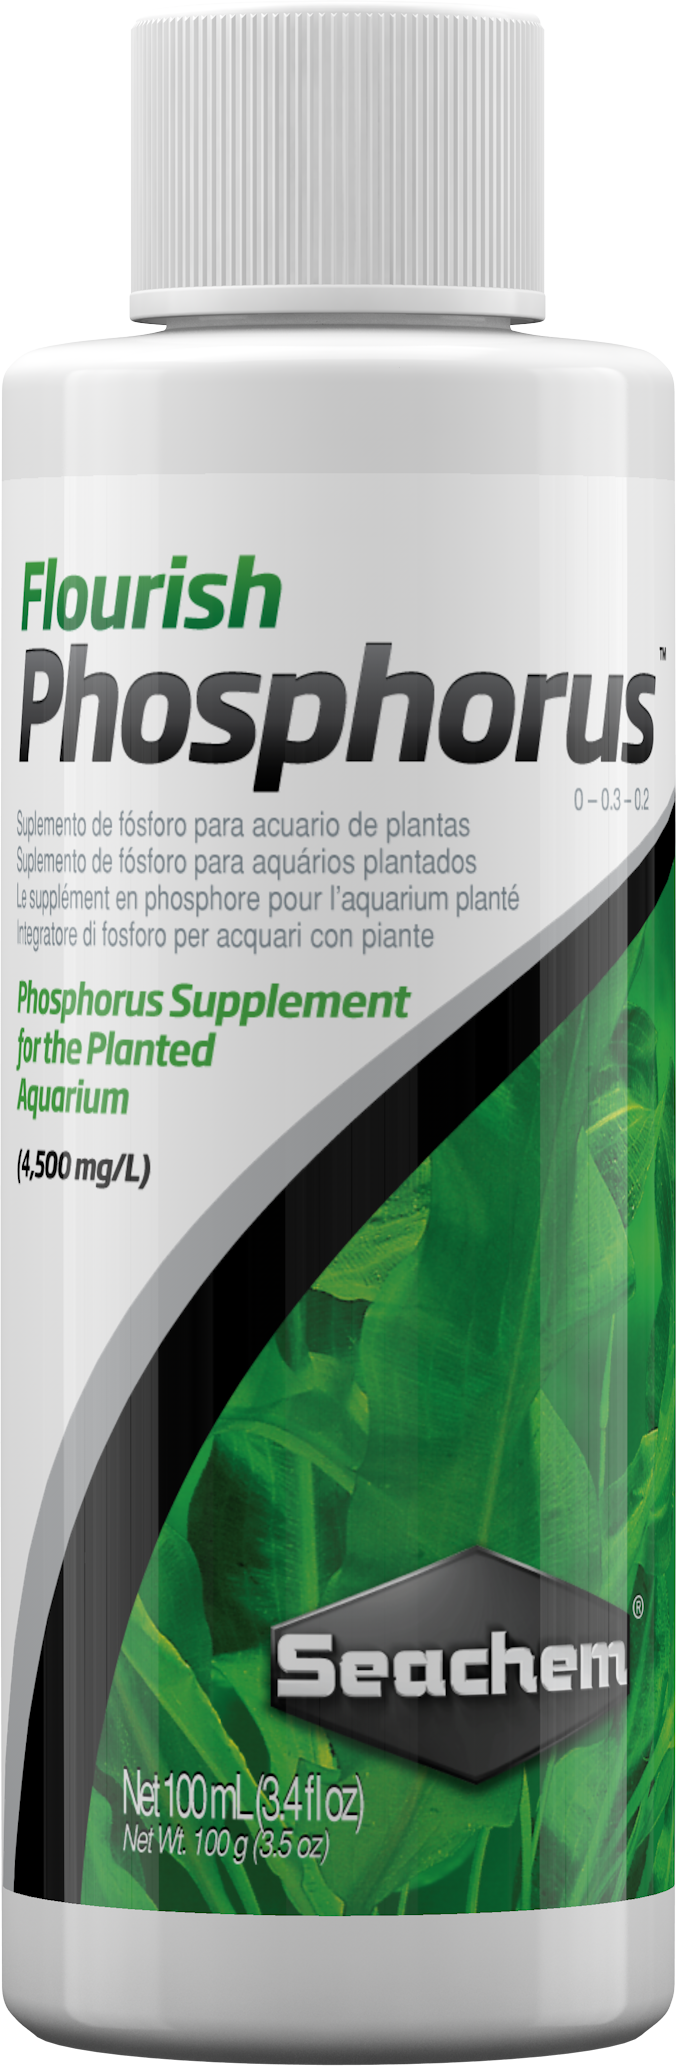 Flourish Phosphorous